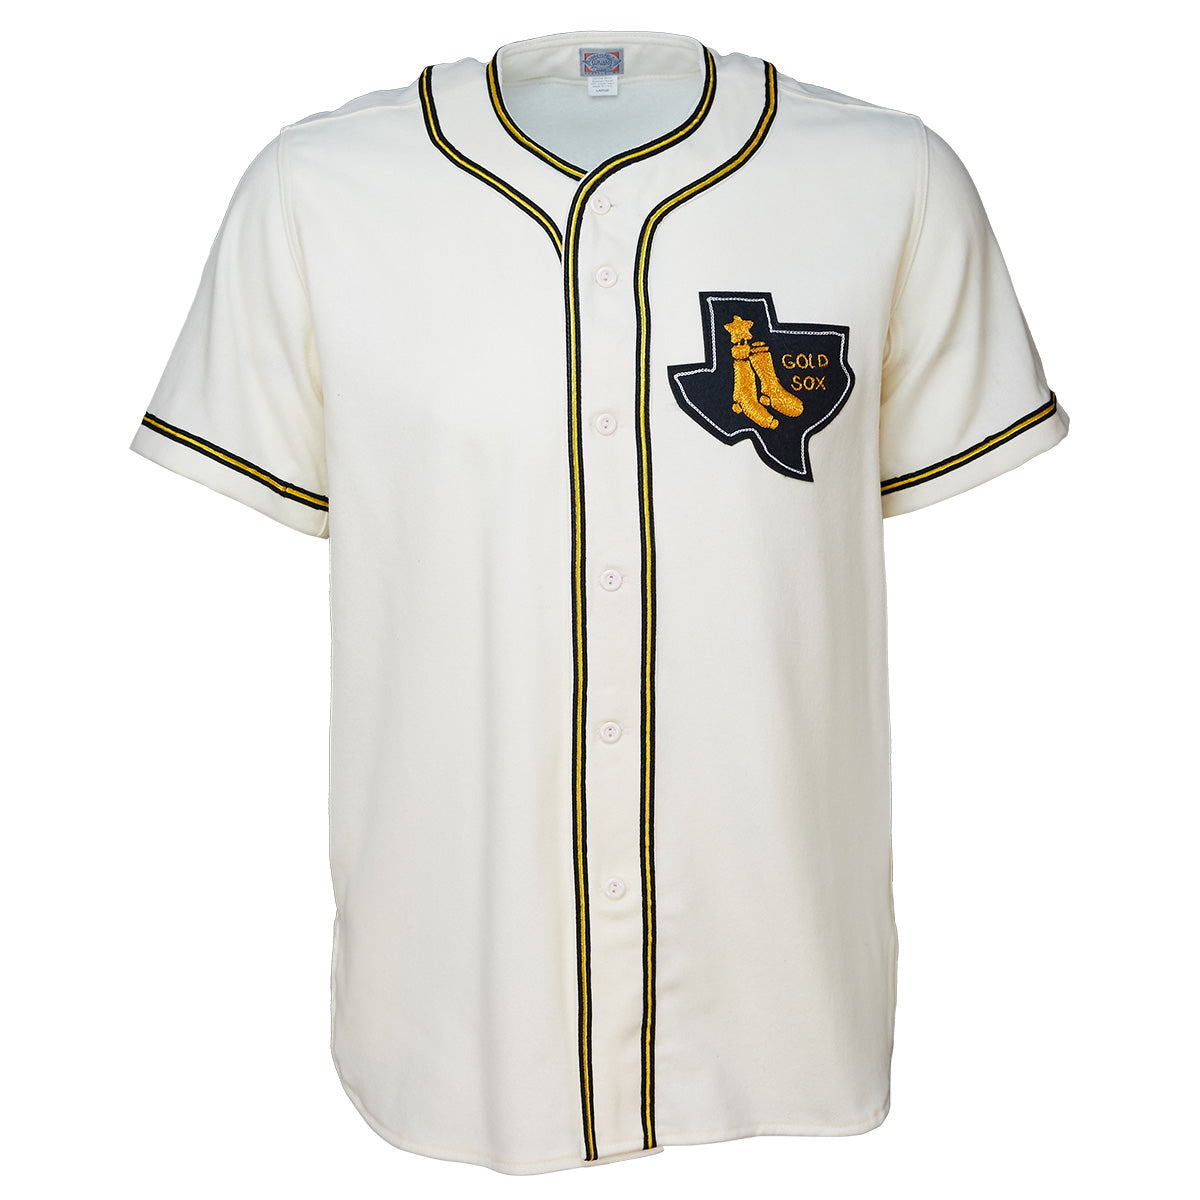 Shirts, Los White Sox Ga Soccer Style Jersey Xl New